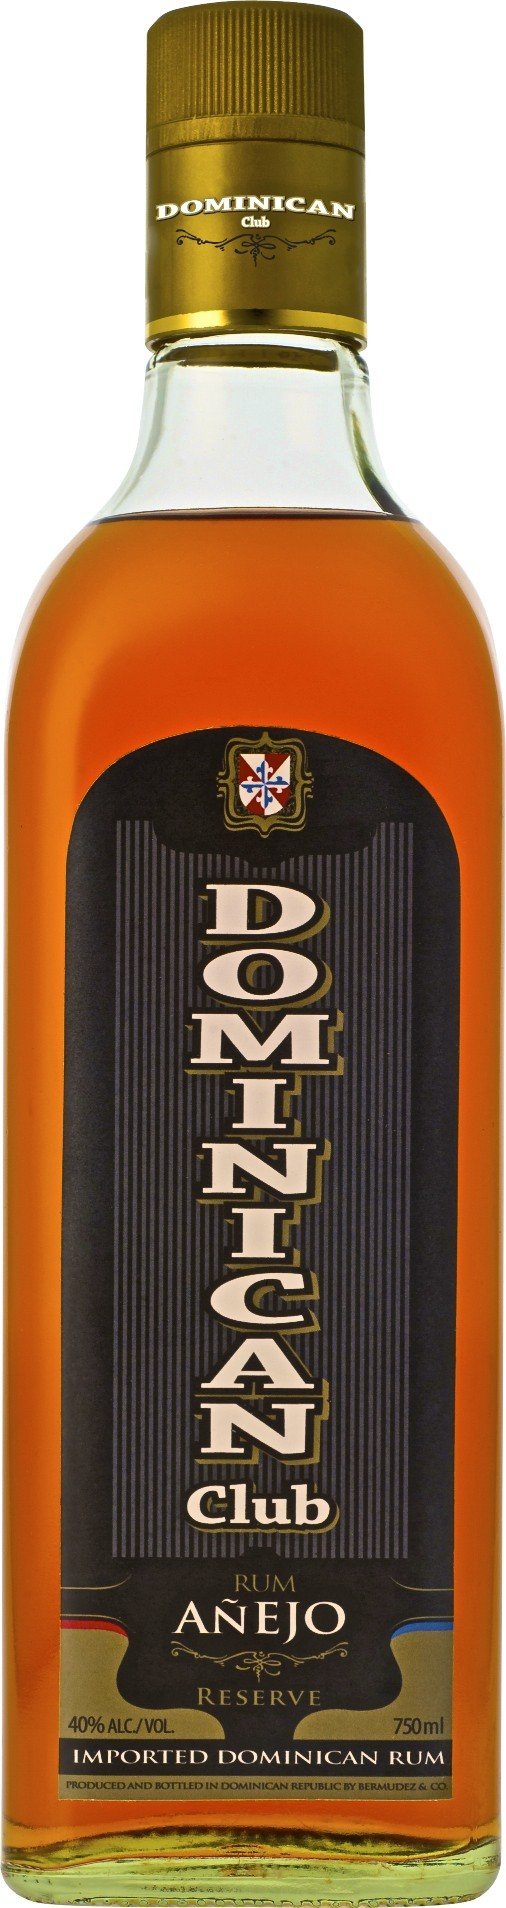 Dominican Club Rum Anejo 1.75L